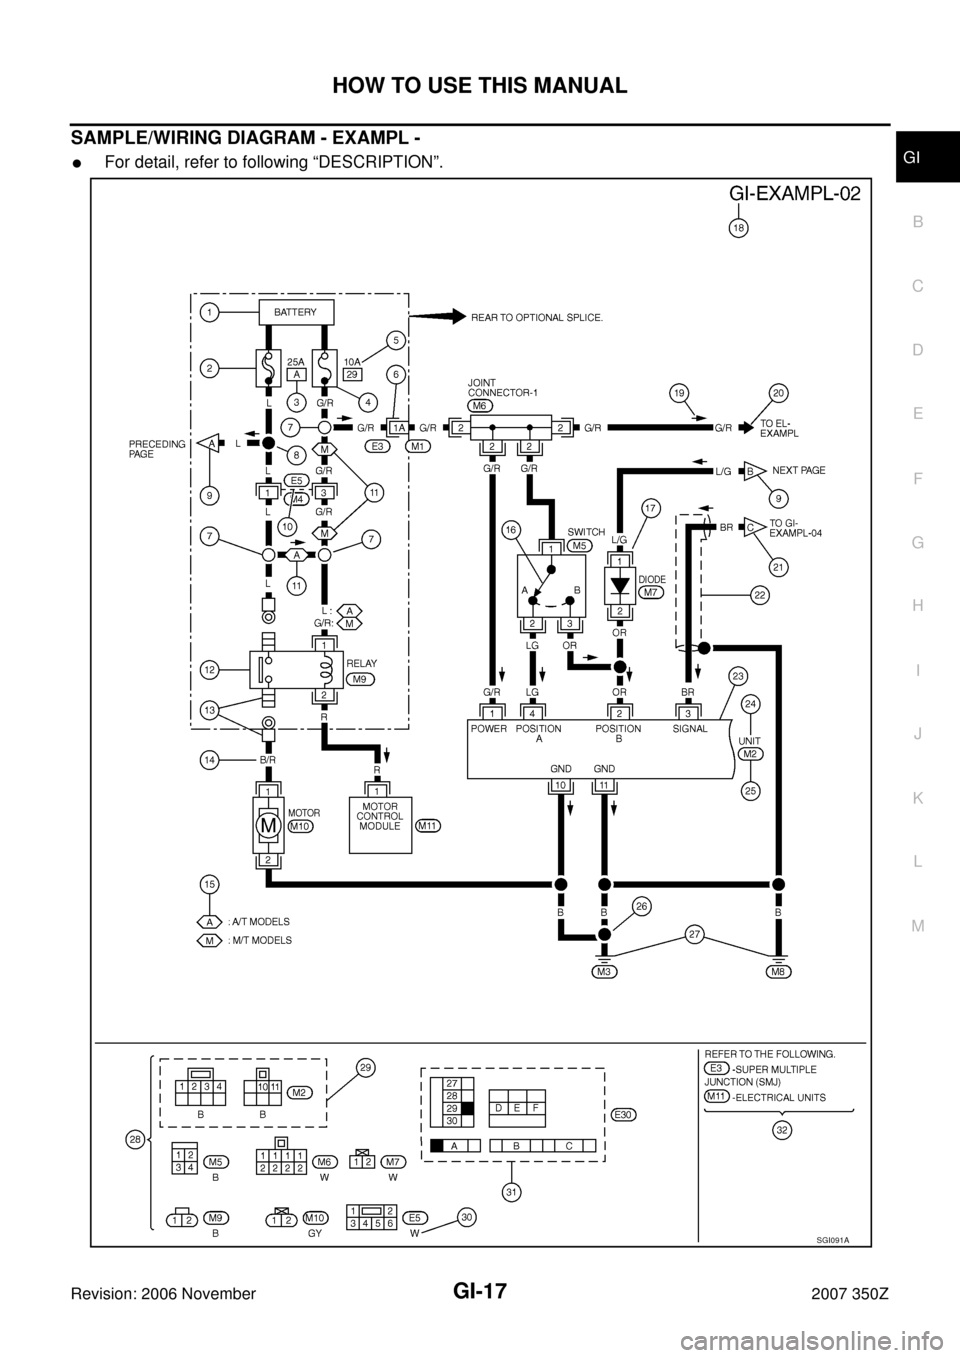 NISSAN 350Z 2007 Z33 General Information Workshop Manual HOW TO USE THIS MANUAL
GI-17
C
D
E
F
G
H
I
J
K
L
MB
GI
Revision: 2006 November2007 350Z
SAMPLE/WIRING DIAGRAM - EXAMPL - 
For detail, refer to following “DESCRIPTION”.
SGI091A 